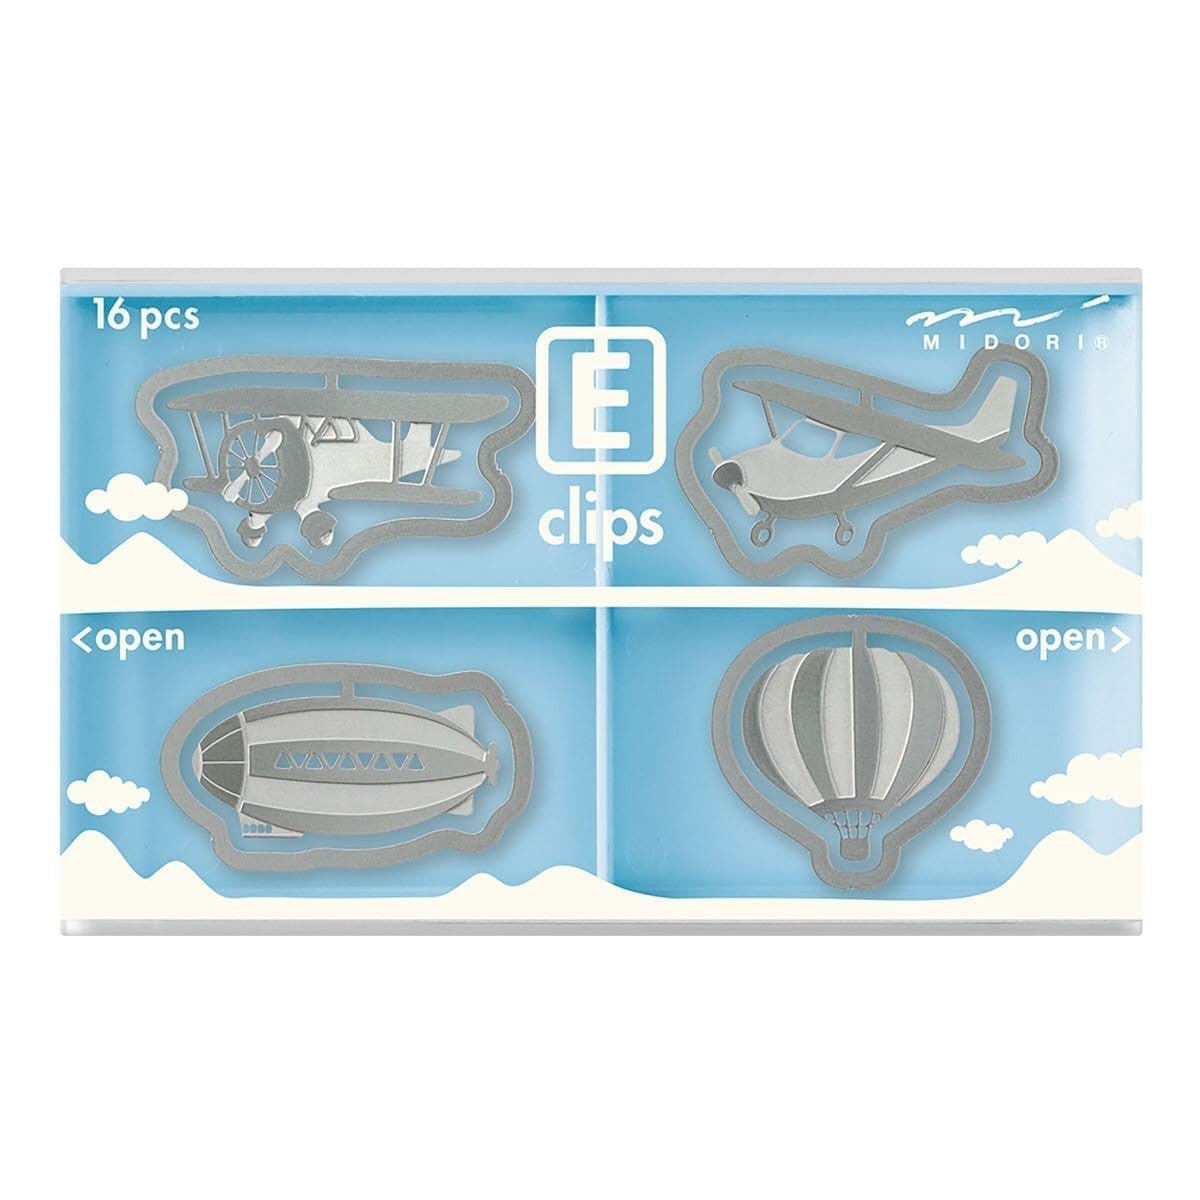 E-clips Gem i metall - Aerial vehicle - Midori - Tidformera